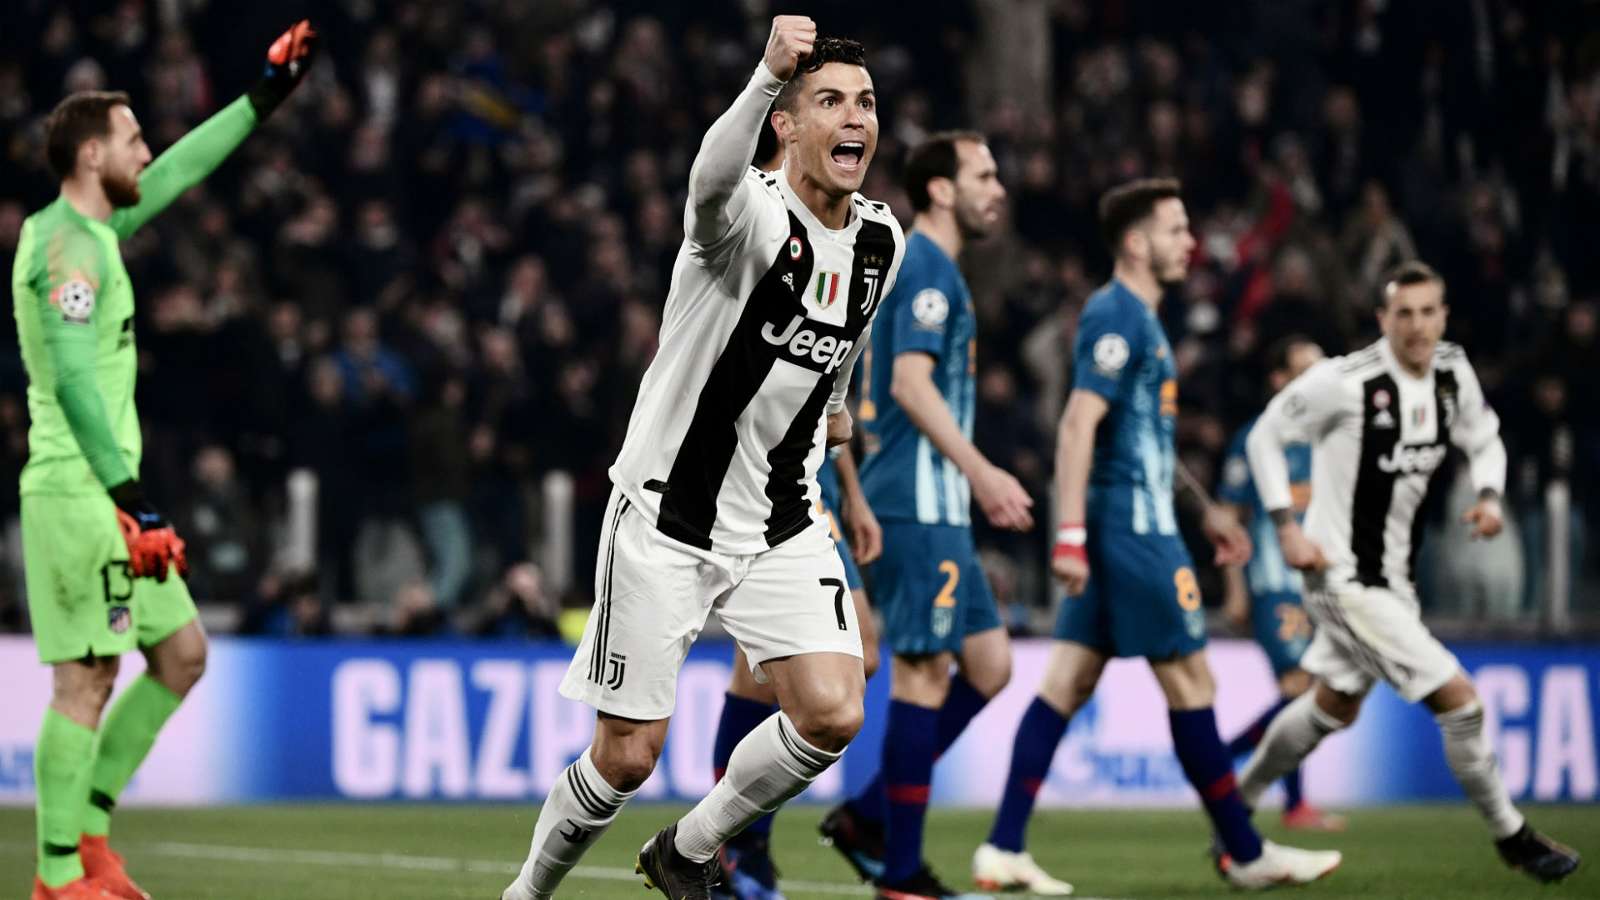 Cristiano Ronaldo, usai mencetak gol ke gawang Atletico Madrid dalam laga leg kedua enam belas besar Liga Champions, Rabu, 13 Maret 2019. (Foto: Getty image)